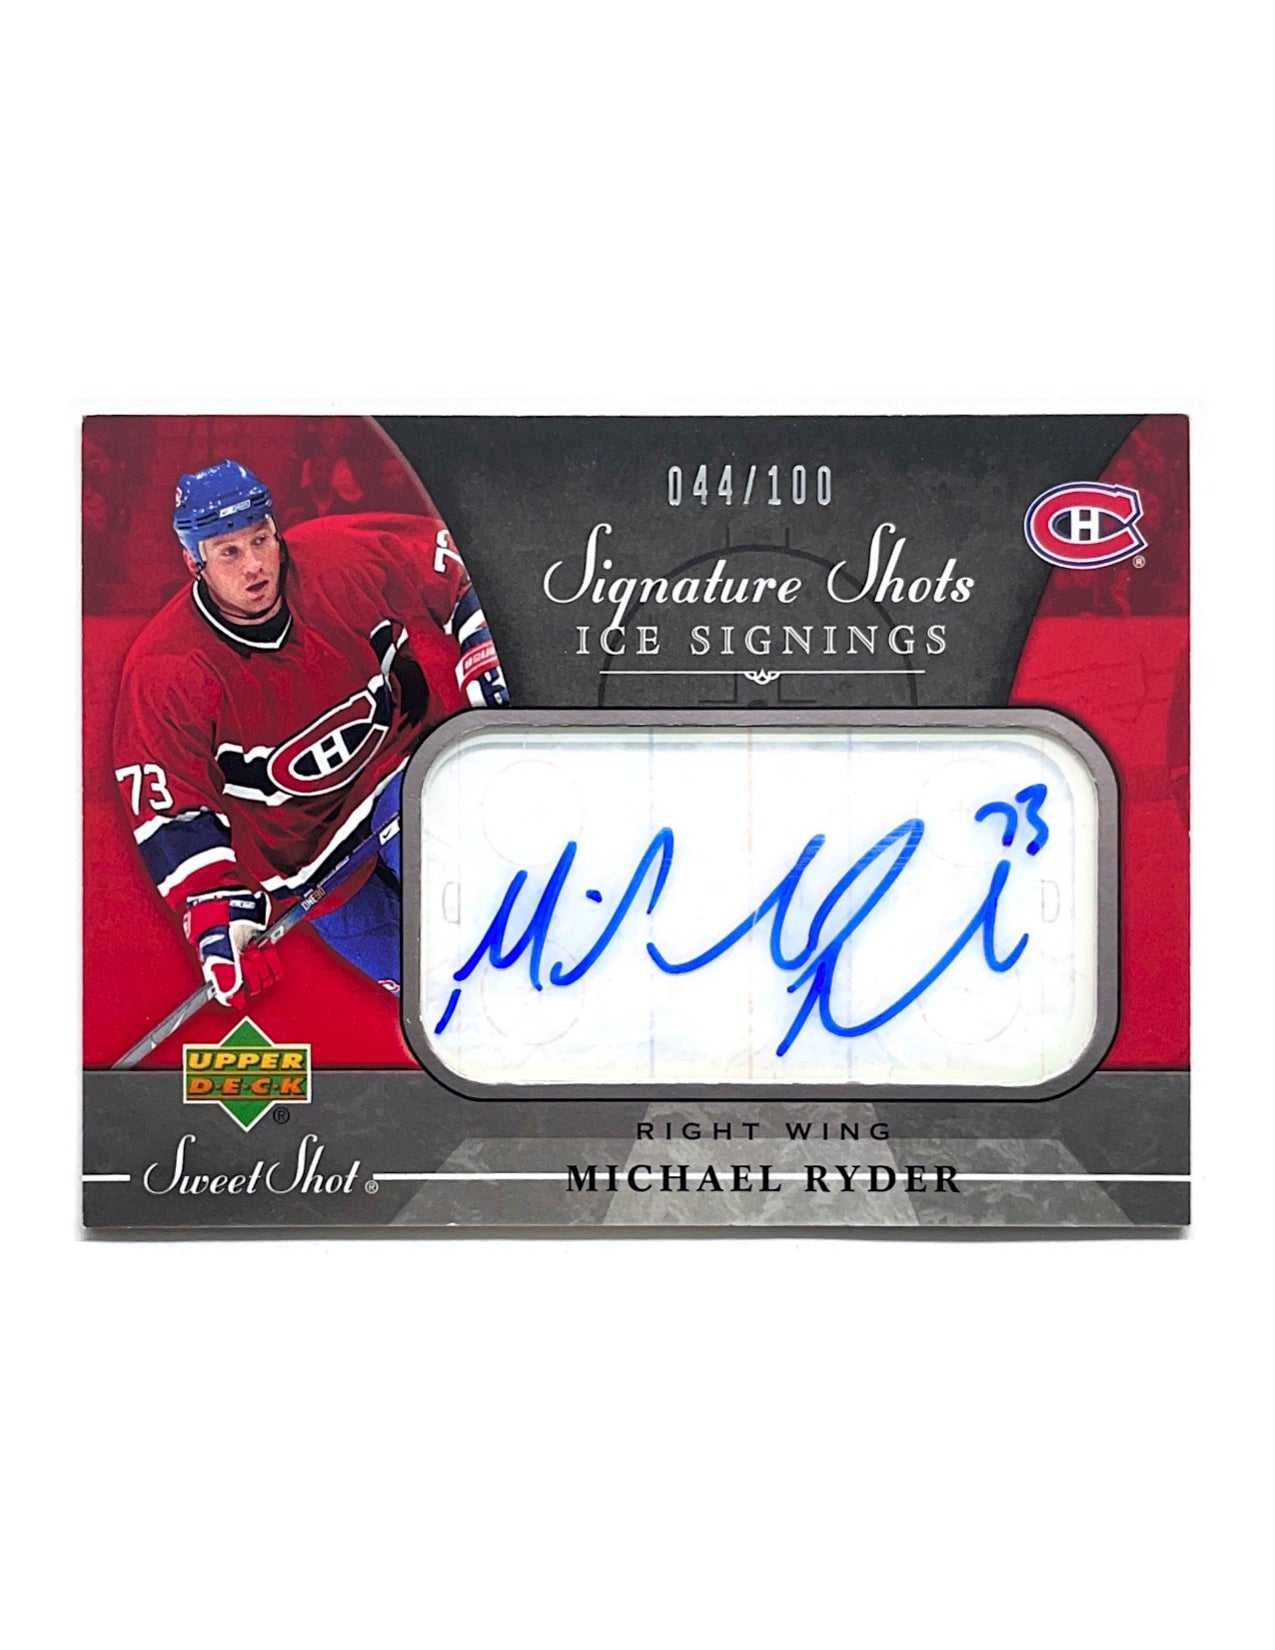 Michael Ryder 2006-07 Upper Deck Sweet Shot Signature Shots Ice Signings Autograph #SSI-MR - 044/100